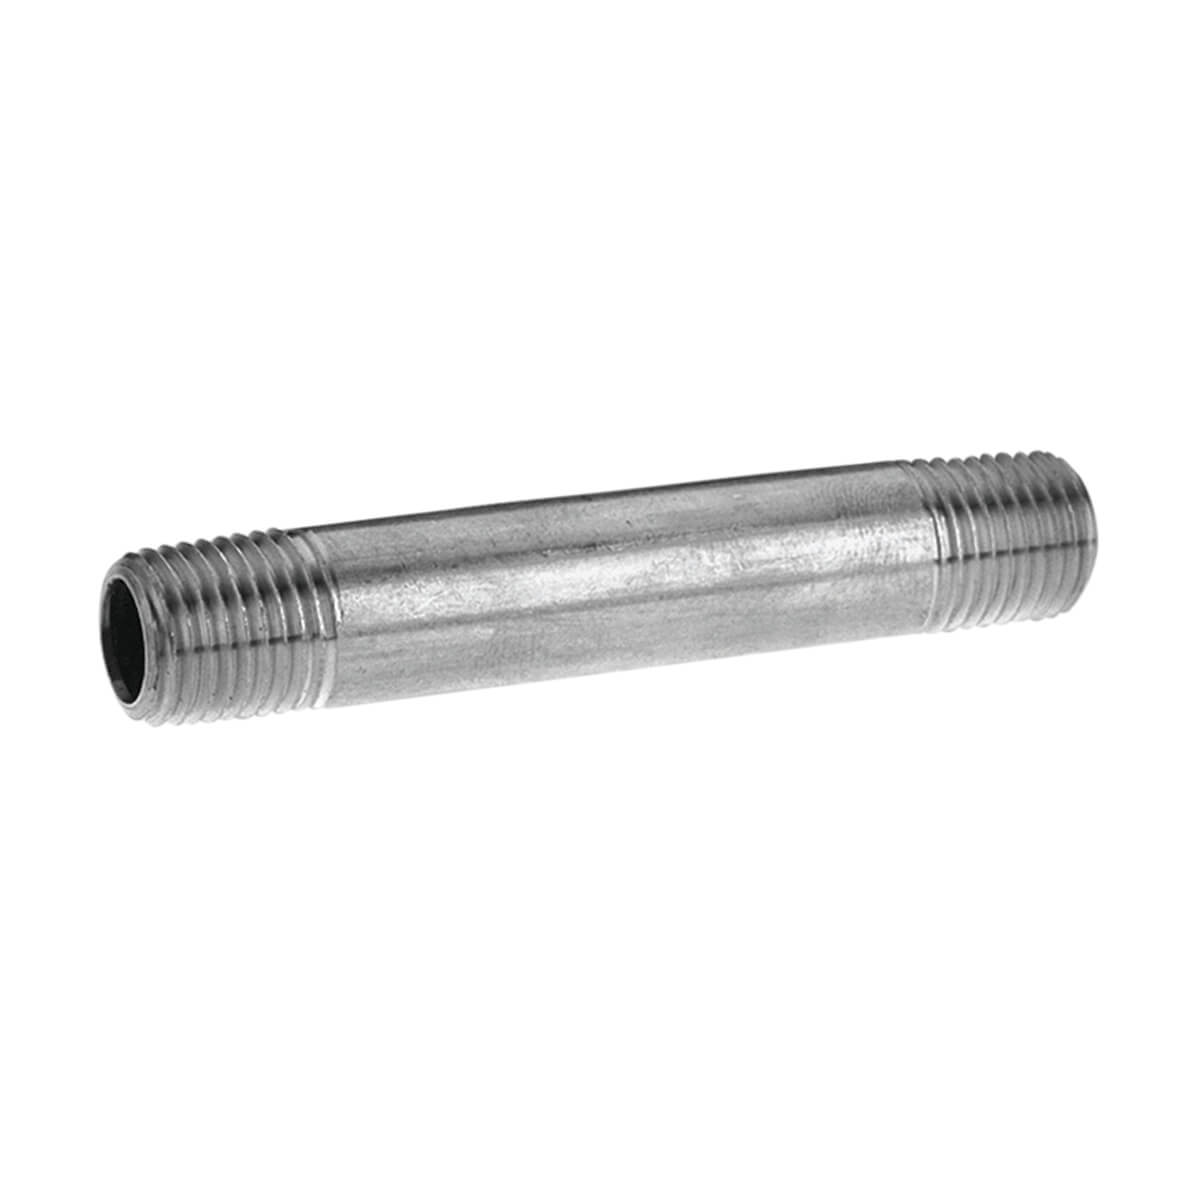 Pipe Nipple Galvanized Steel - 3/4-in x 4-1/2-in